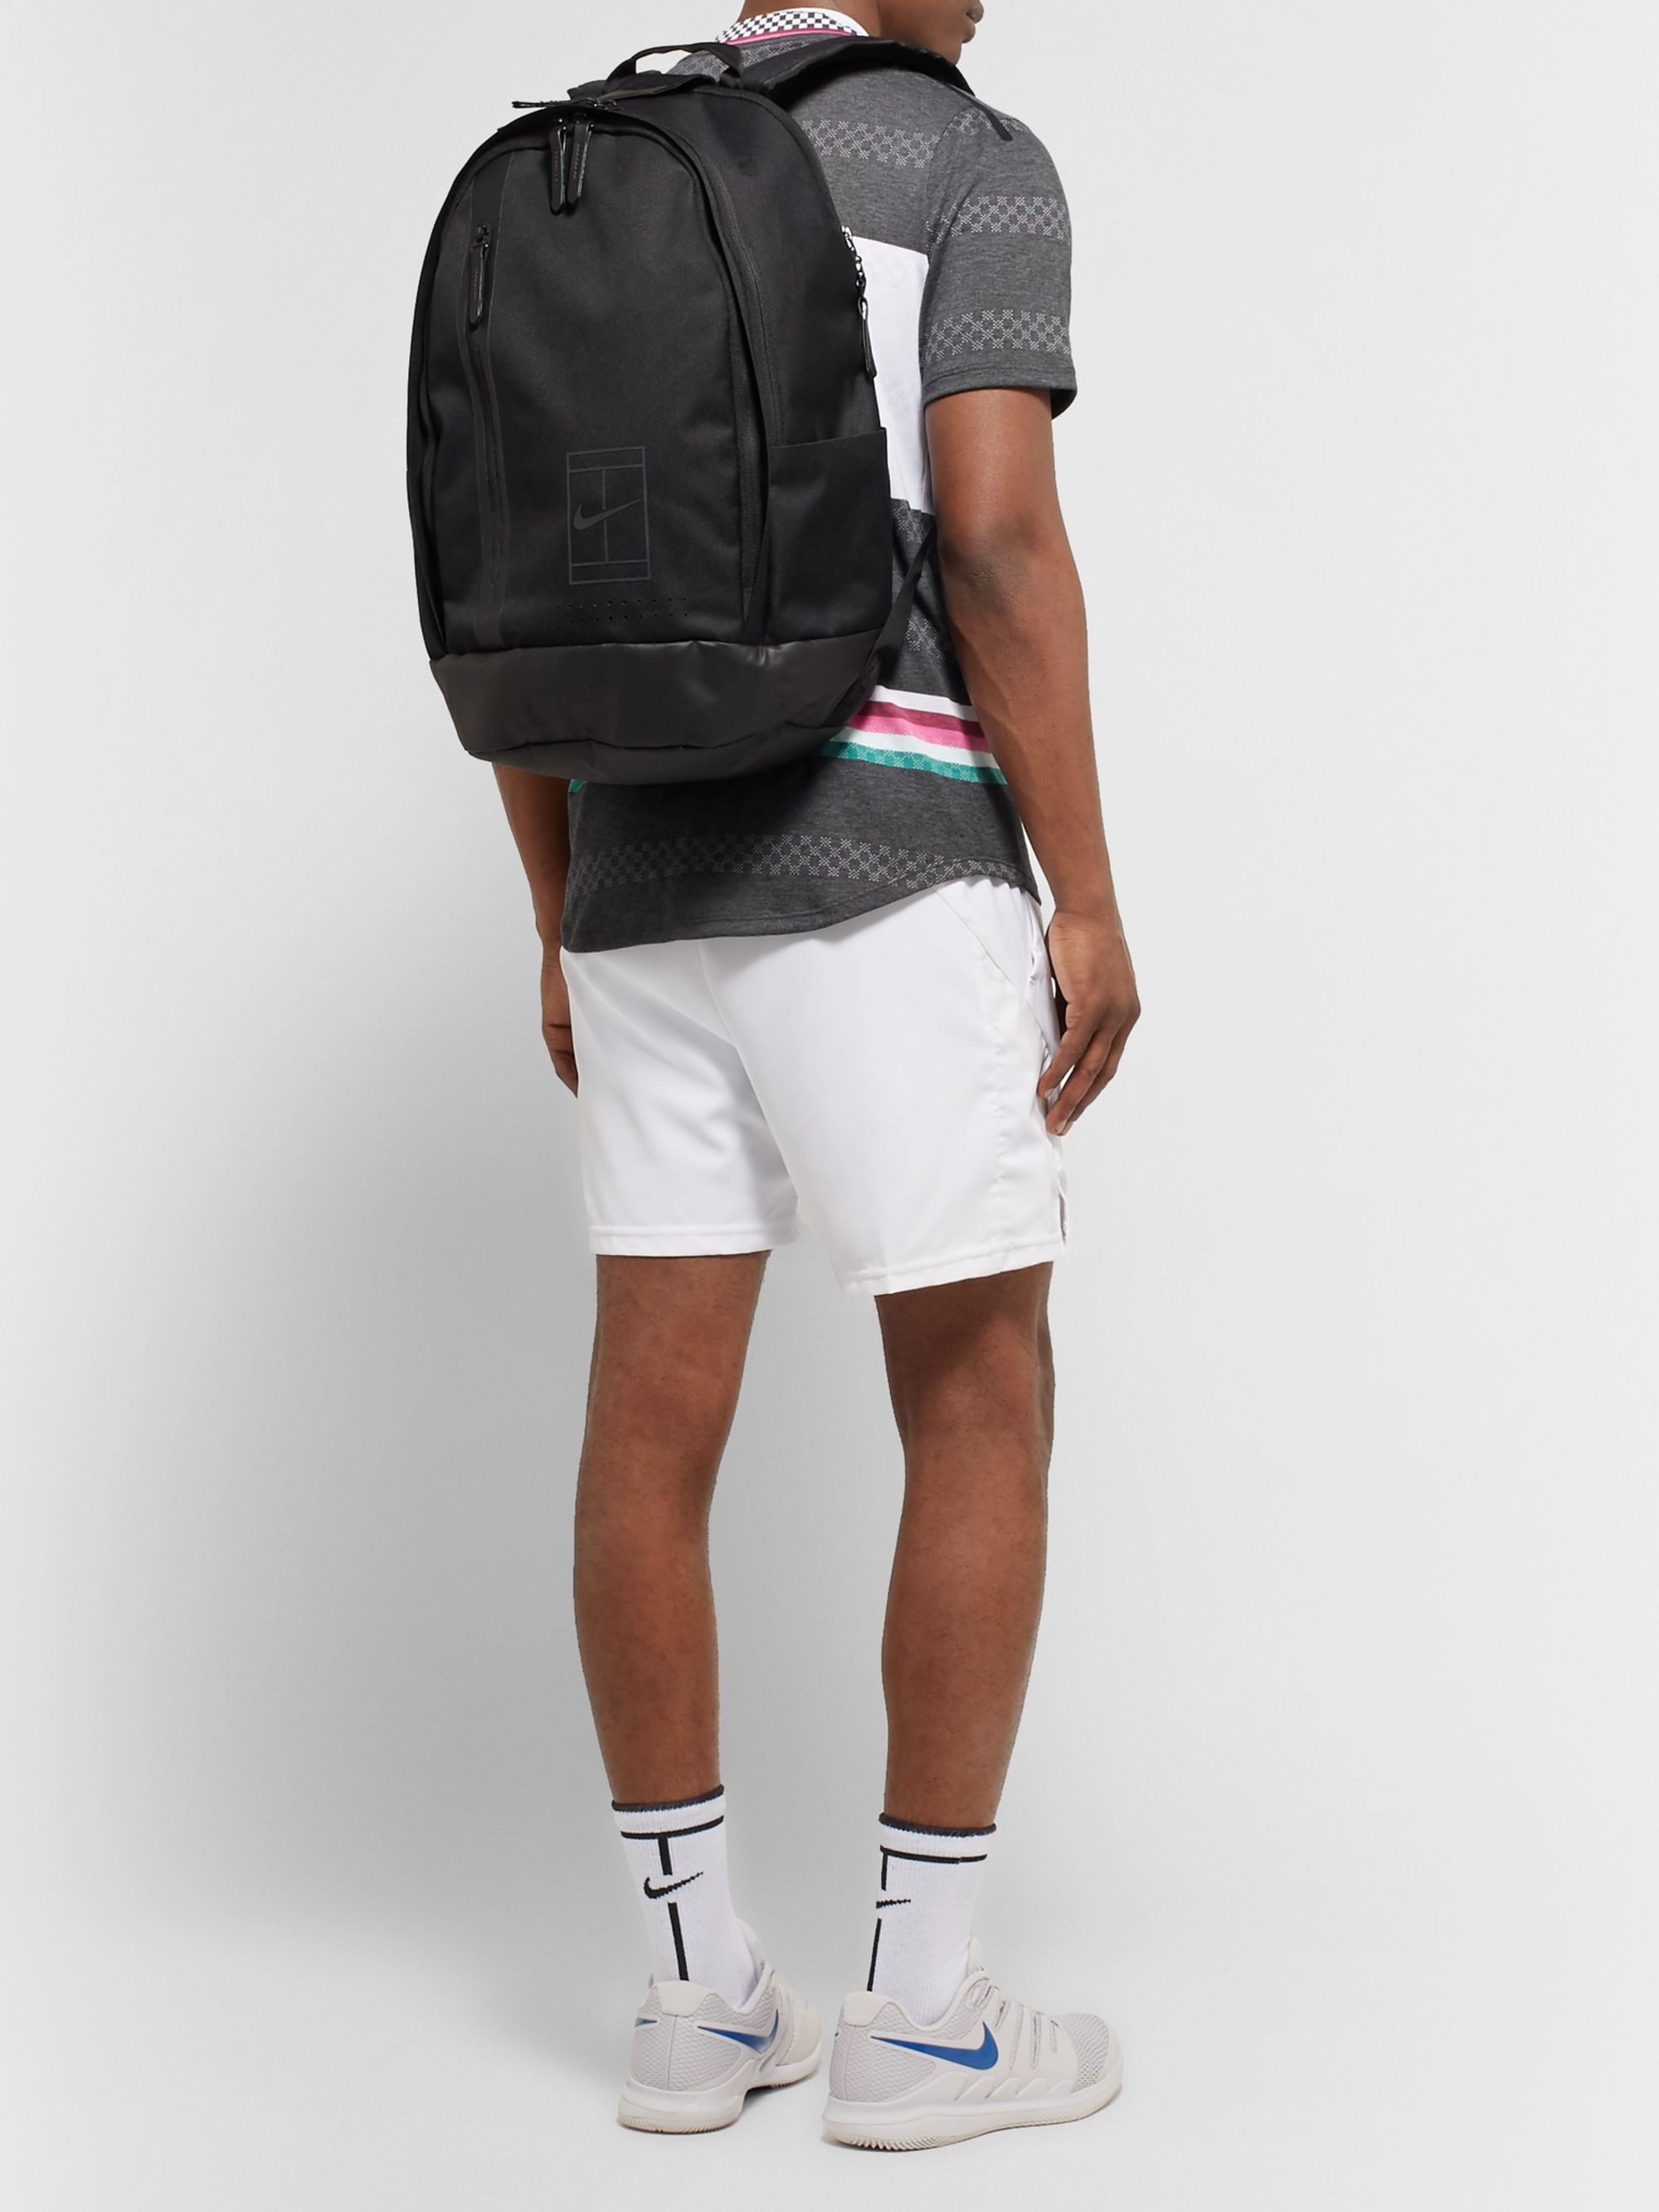 nike tennis court backpack